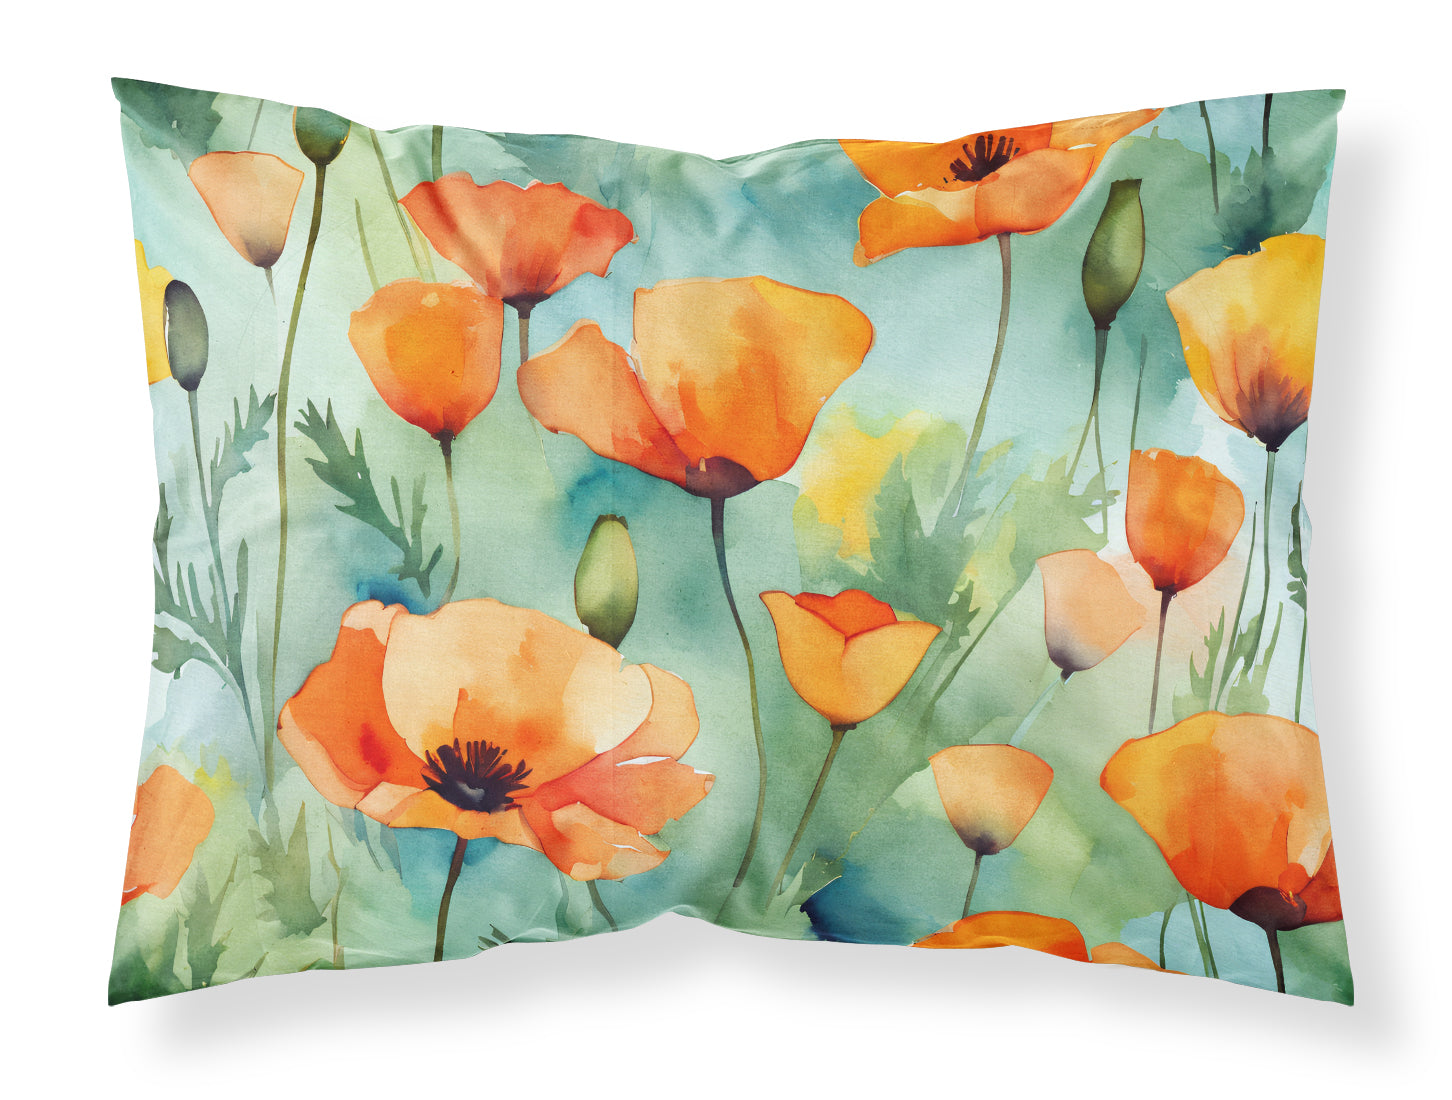 Buy this California California Poppies in Watercolor Fabric Standard Pillowcase